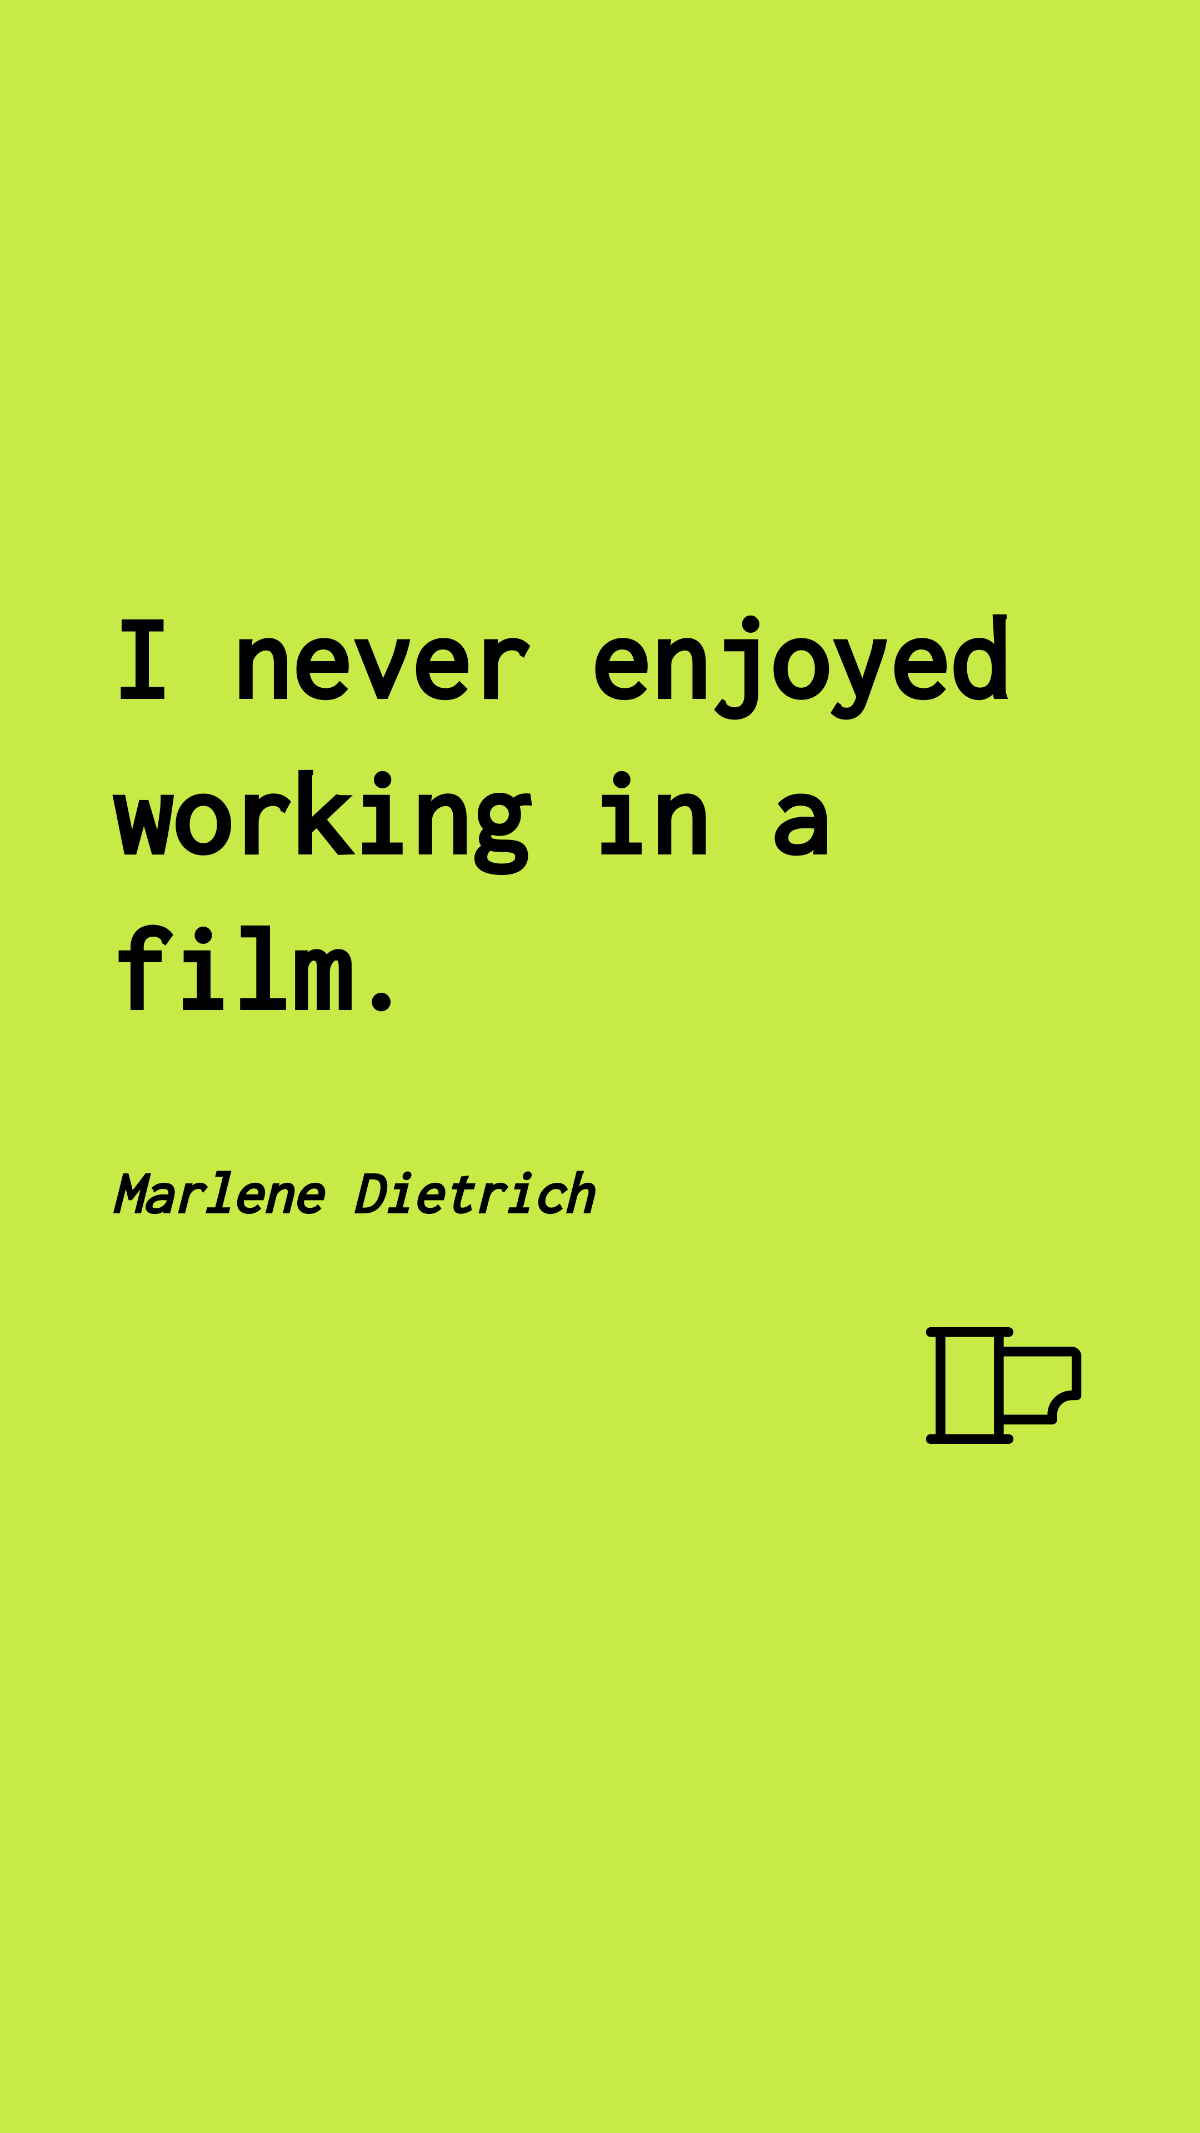 Marlene Dietrich - I never enjoyed working in a film.